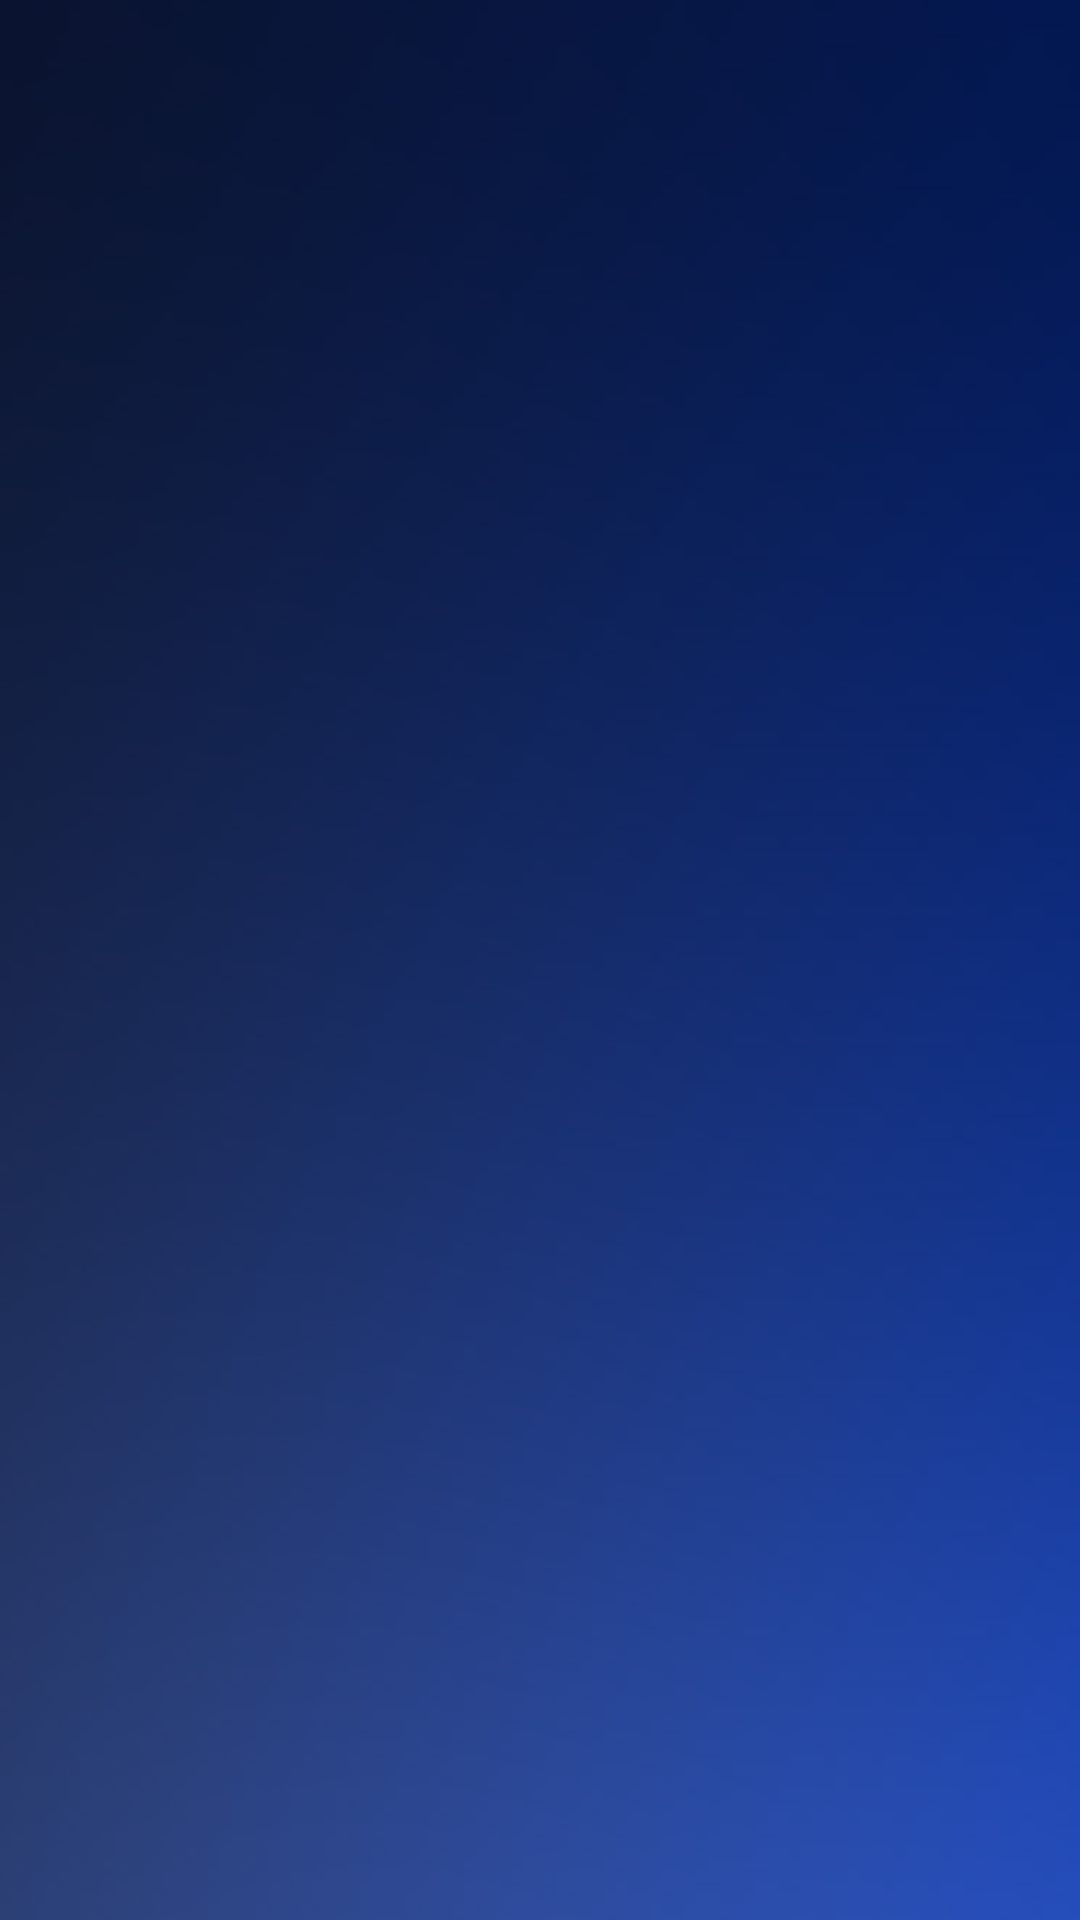 Pure Dark Blue Ocean Gradation Blur Backgrounds iPhone 8 Wallpapers Free Download